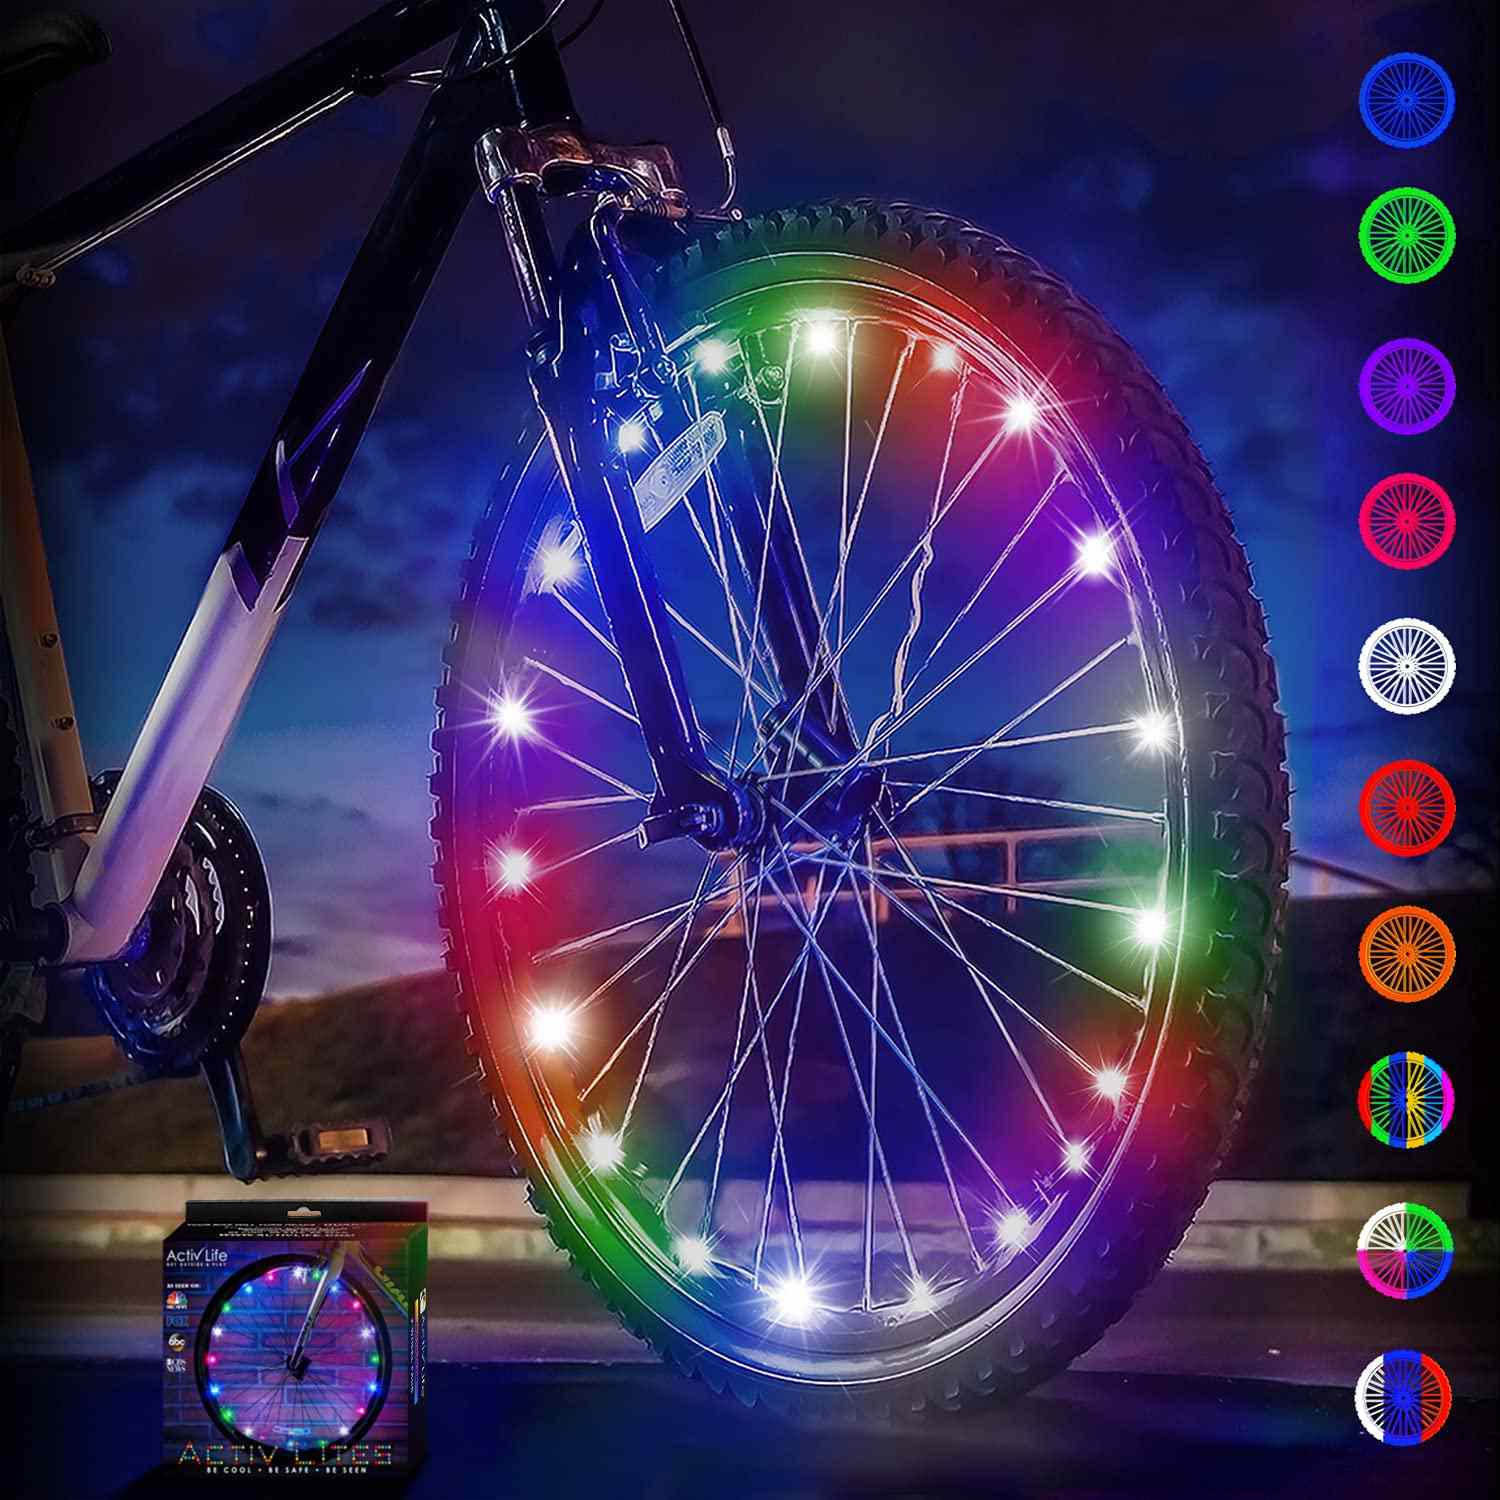 Activ Life LED fiets wiel verlichting